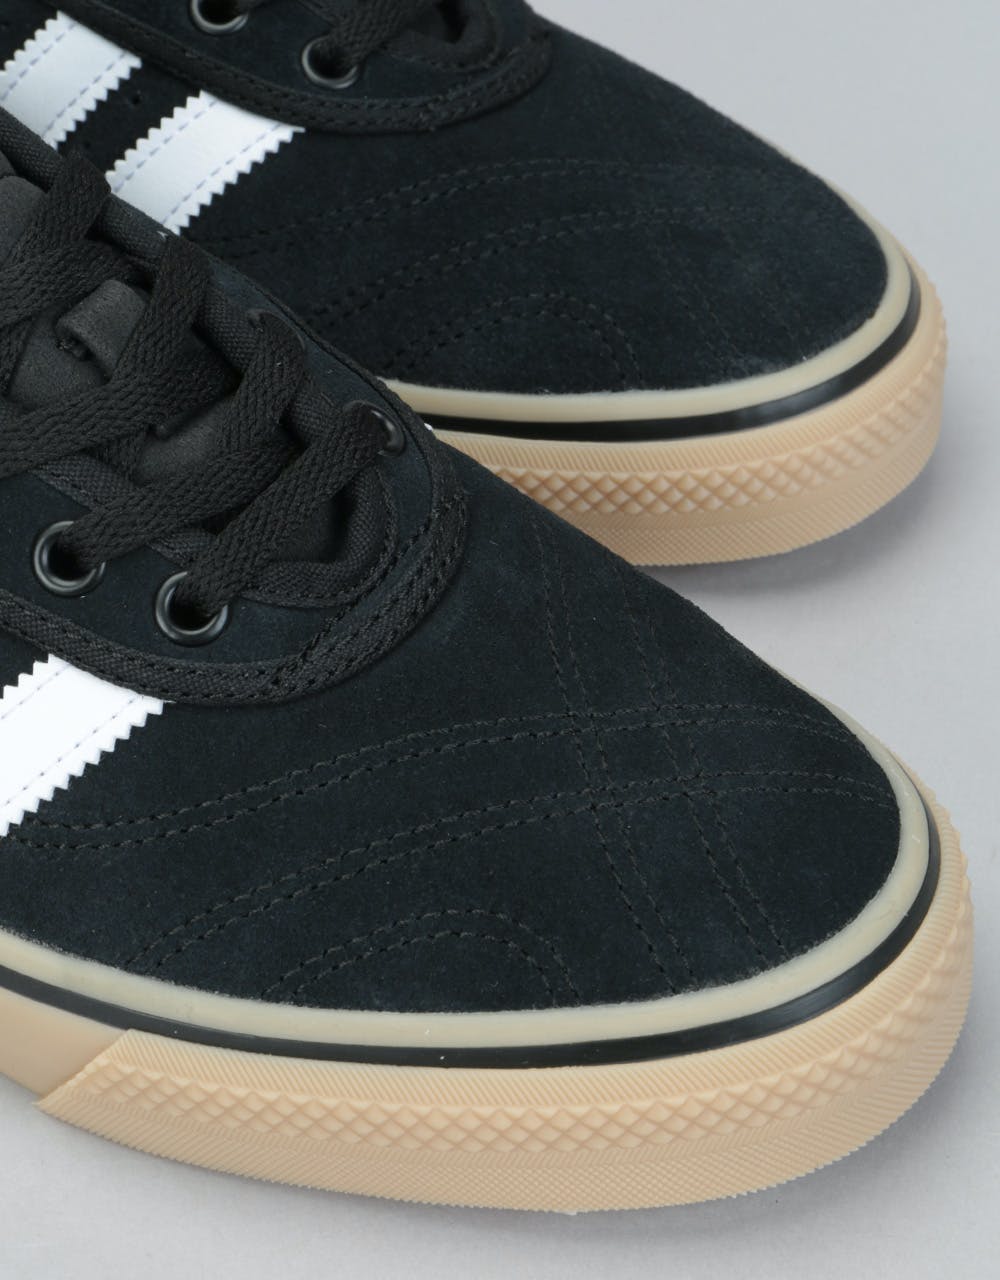 Adidas Adi-Ease Premiere Skate Shoes - Core Black/White/Gum